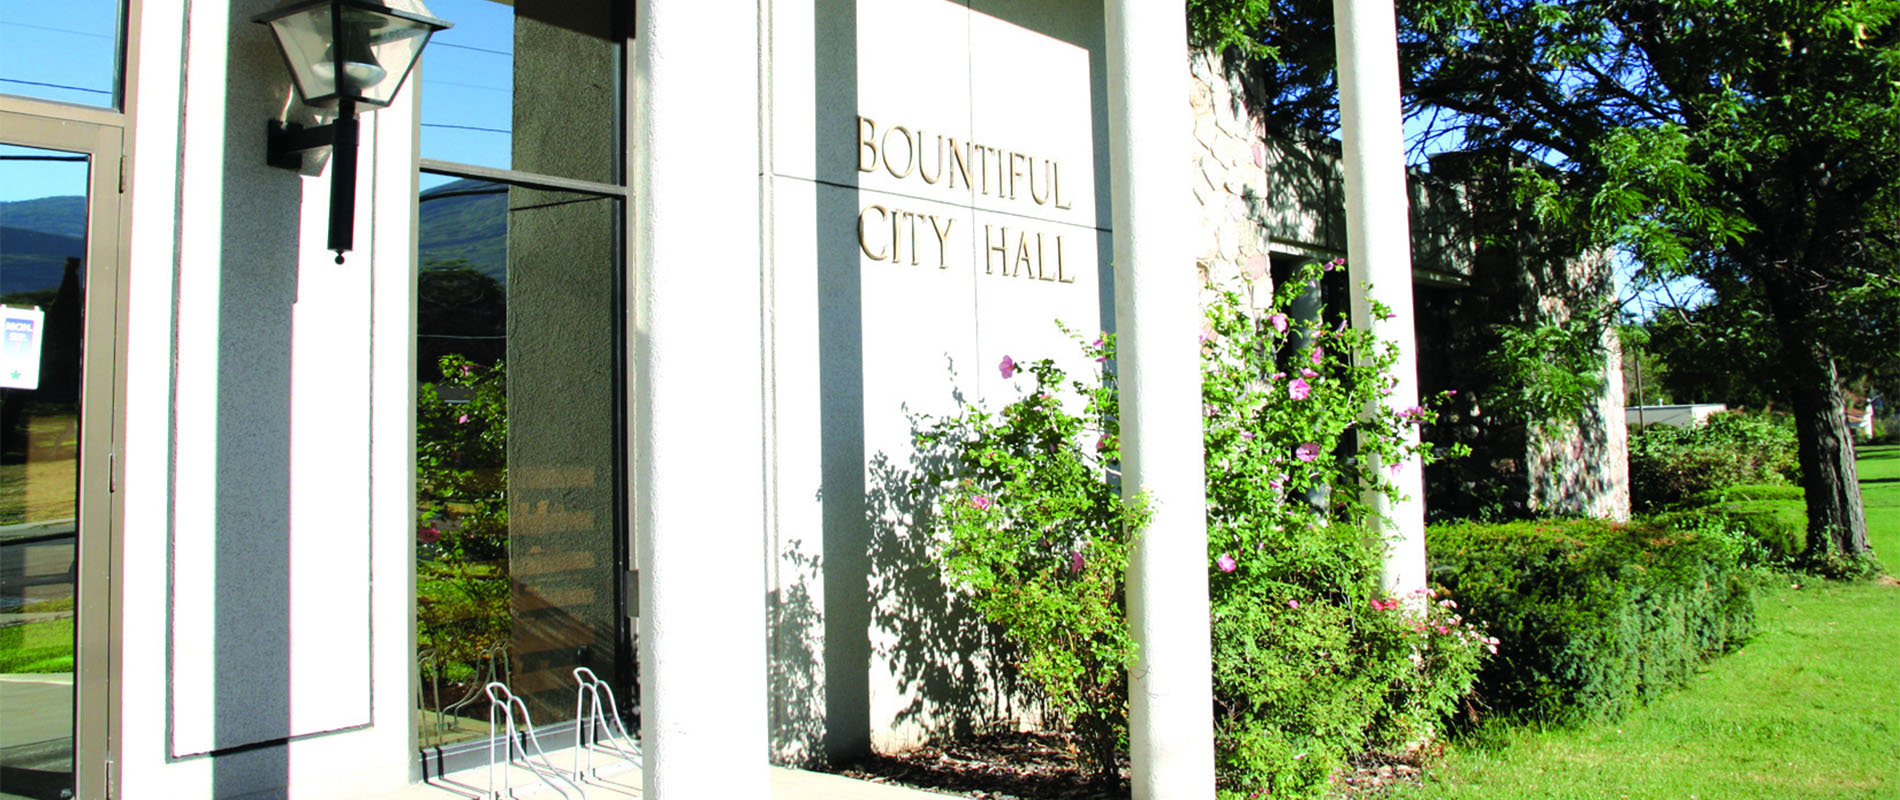 Bountiful City Hall